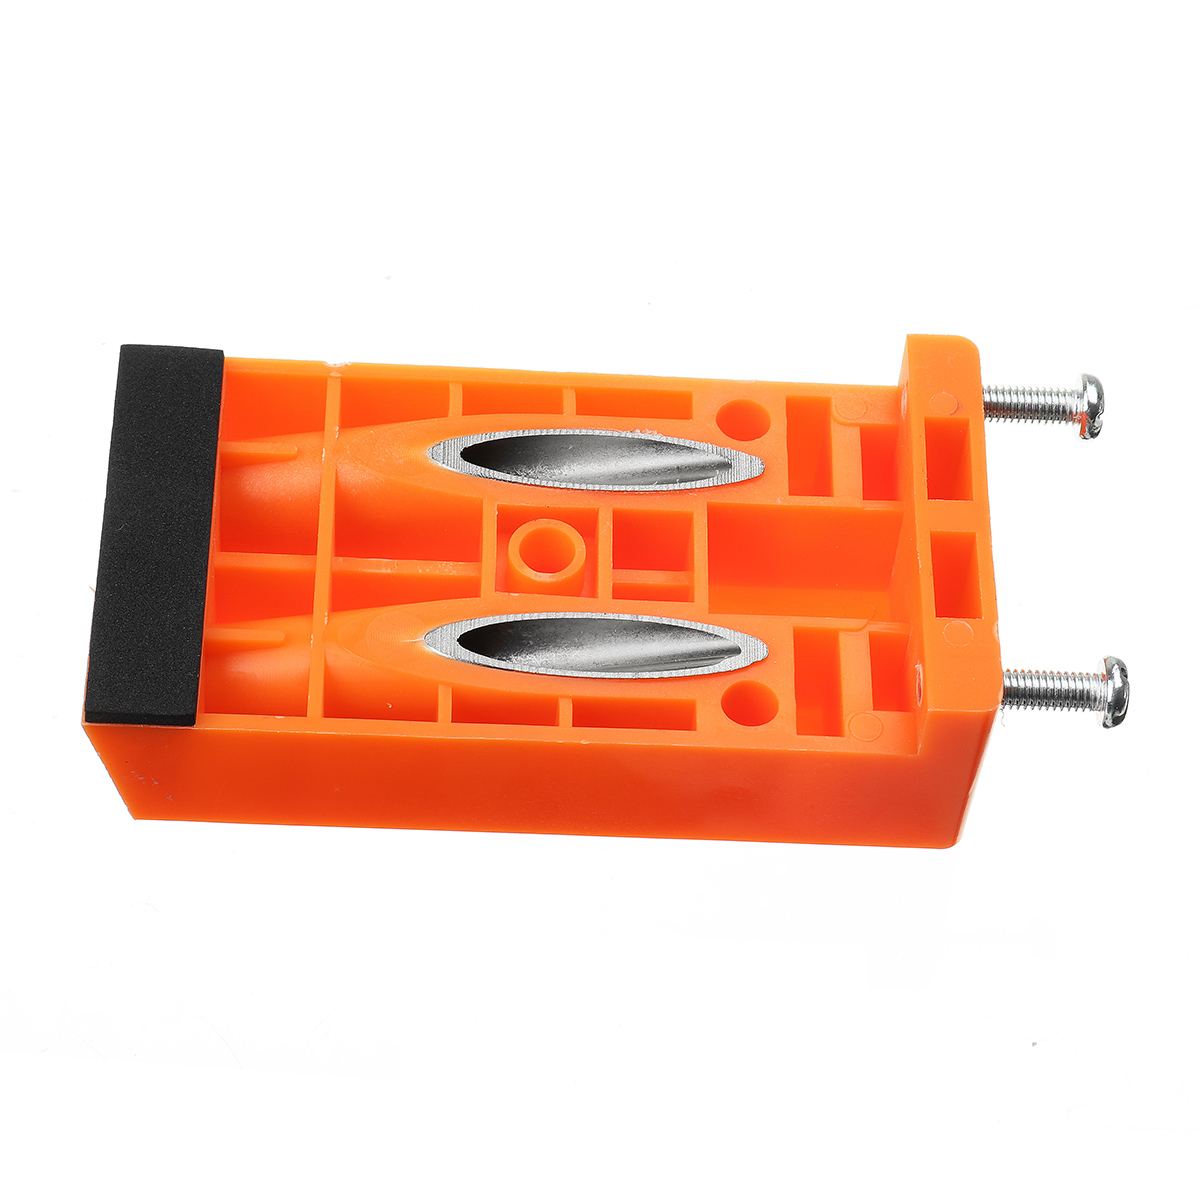 Plastic-Pocket-Hole-Jig-Set-Woodworking-Tools-Welding-C-Clamp-Locking-Plier-Tenon-Locator-1662682-4